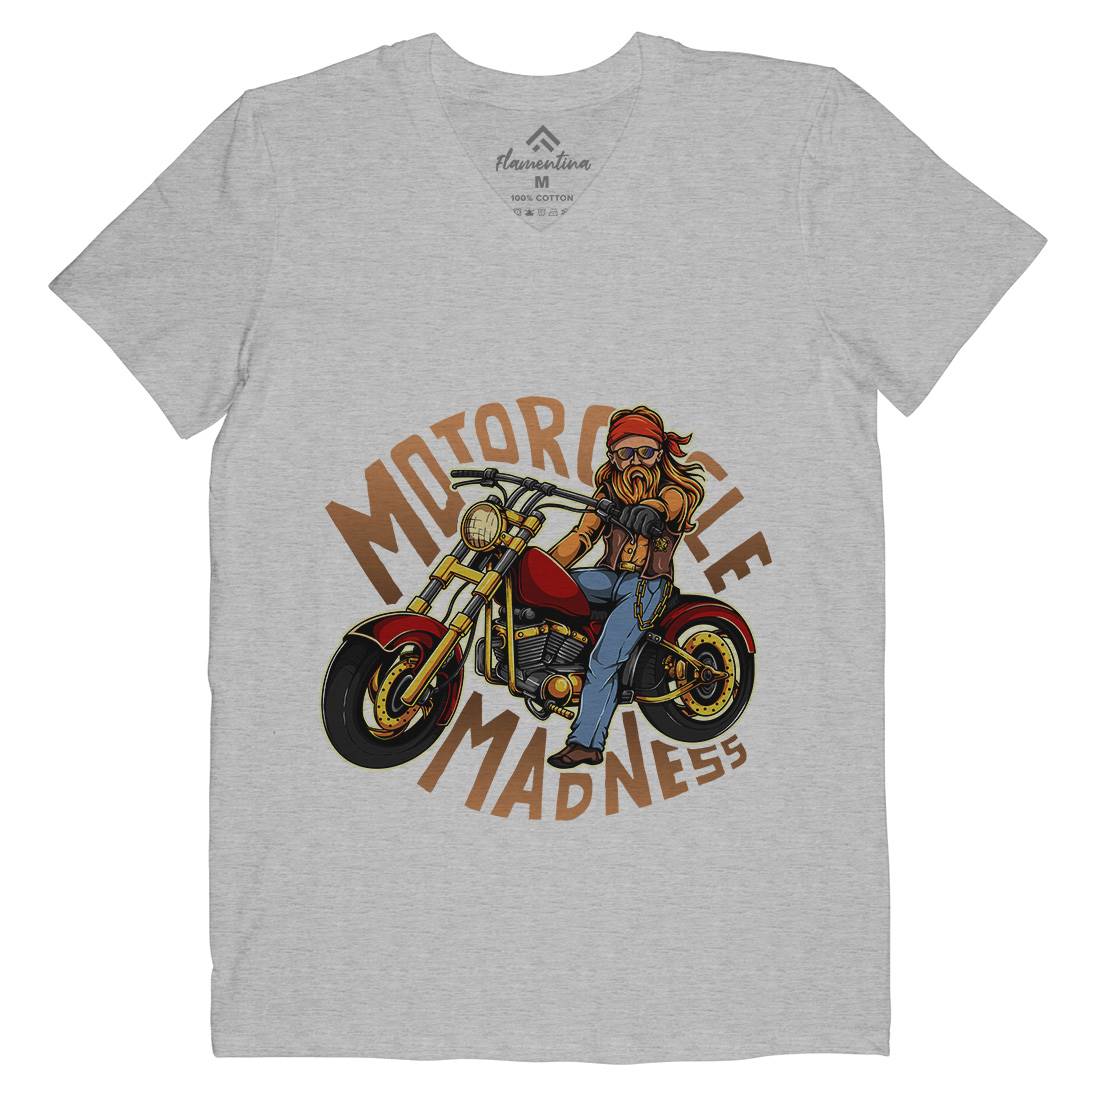 Madness Mens V-Neck T-Shirt Motorcycles A438